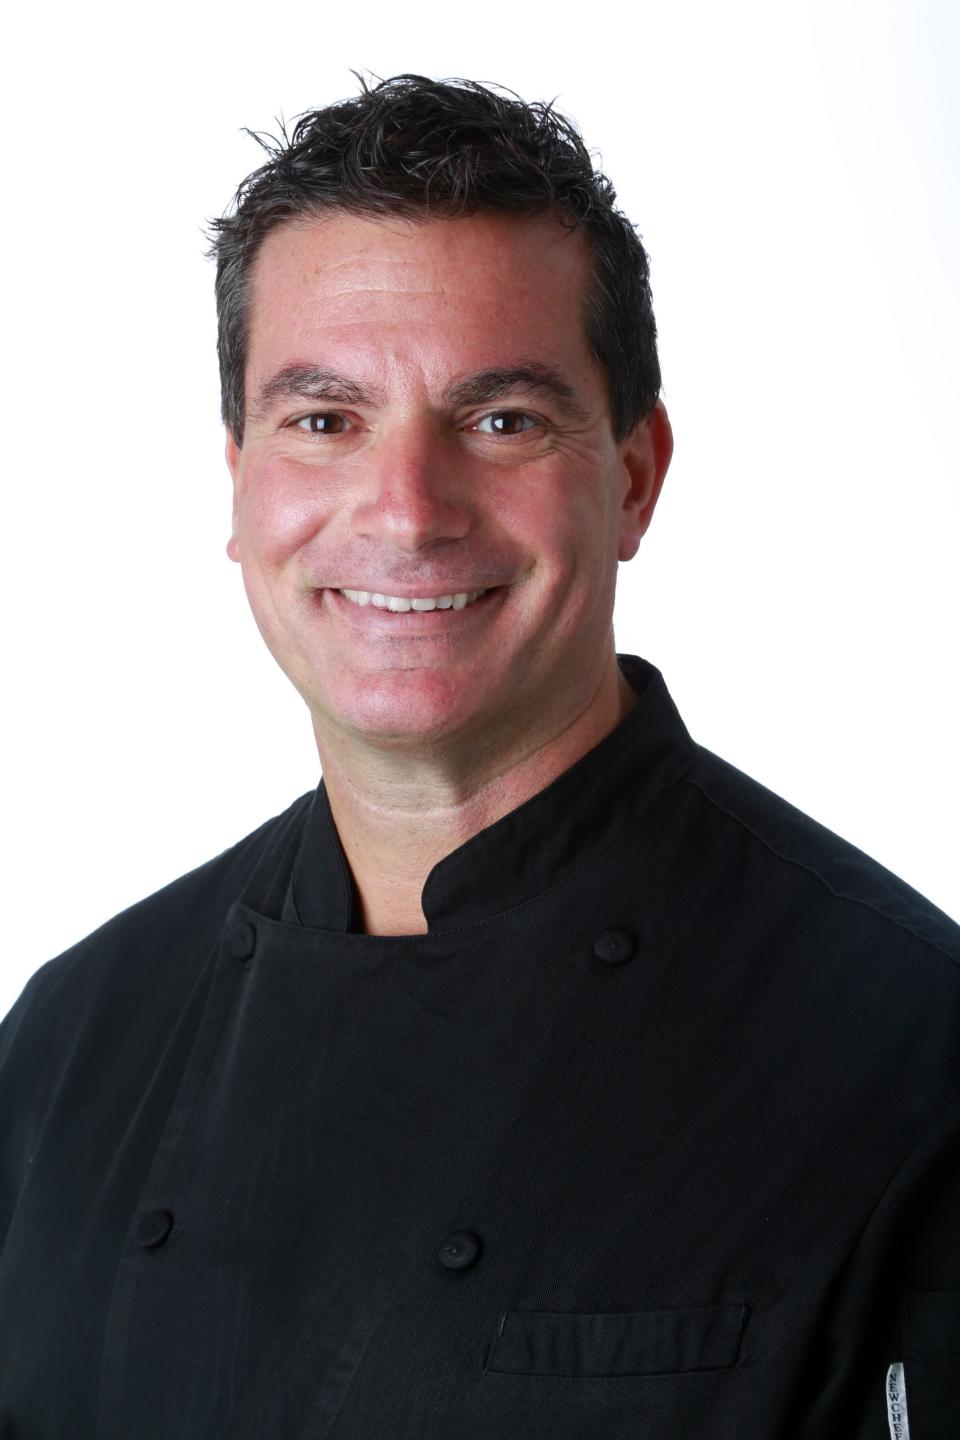 The Breakers' executive chef of restaurants, Anthony Sicignano.